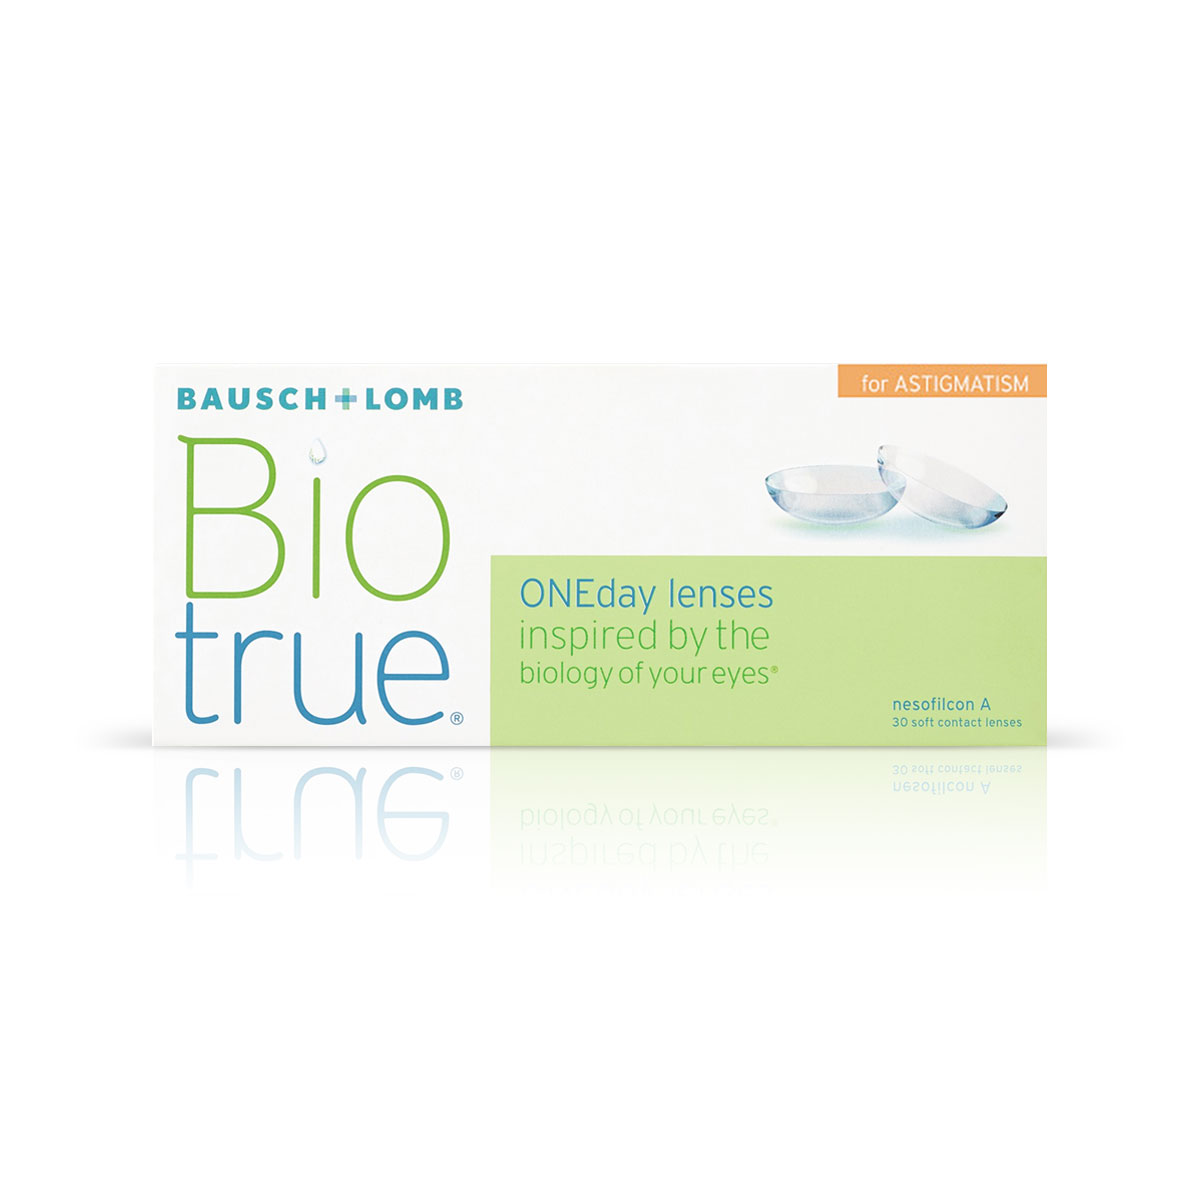 Bausch + Lomb Biotrue ONEday for Astigmatism 30 pack, Daglenzen, Contactlenzen, 